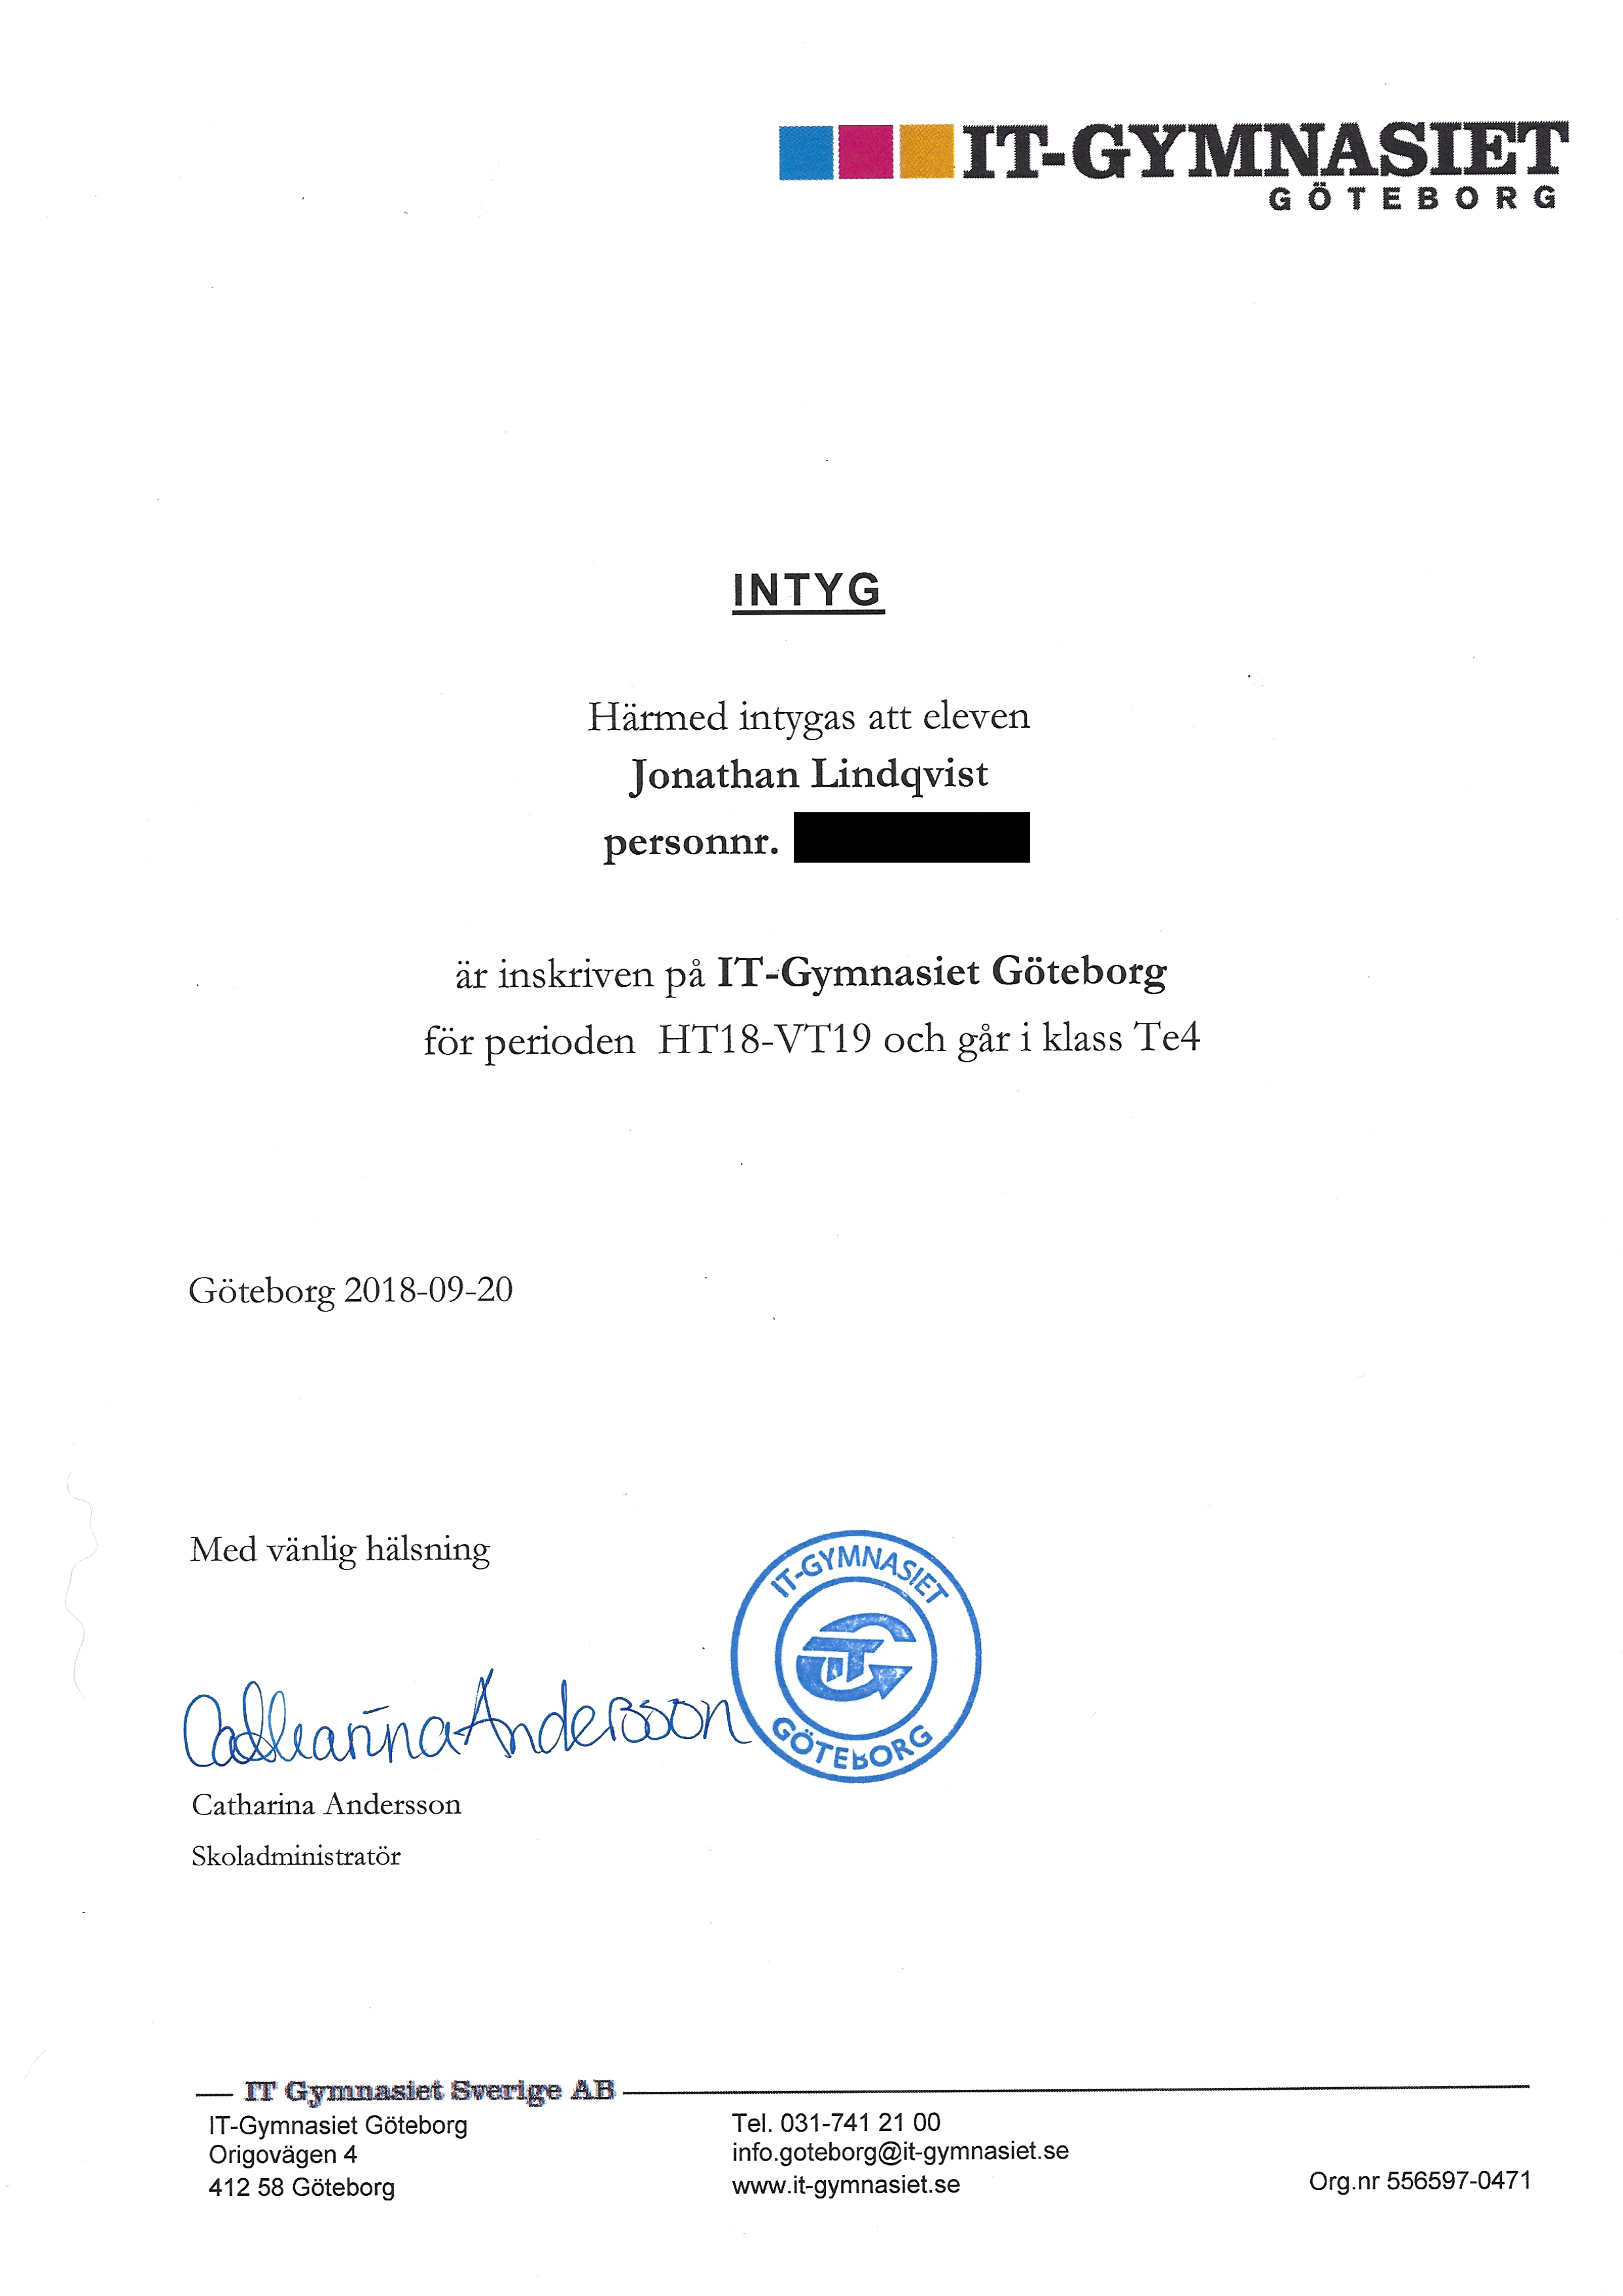 ITG certificate